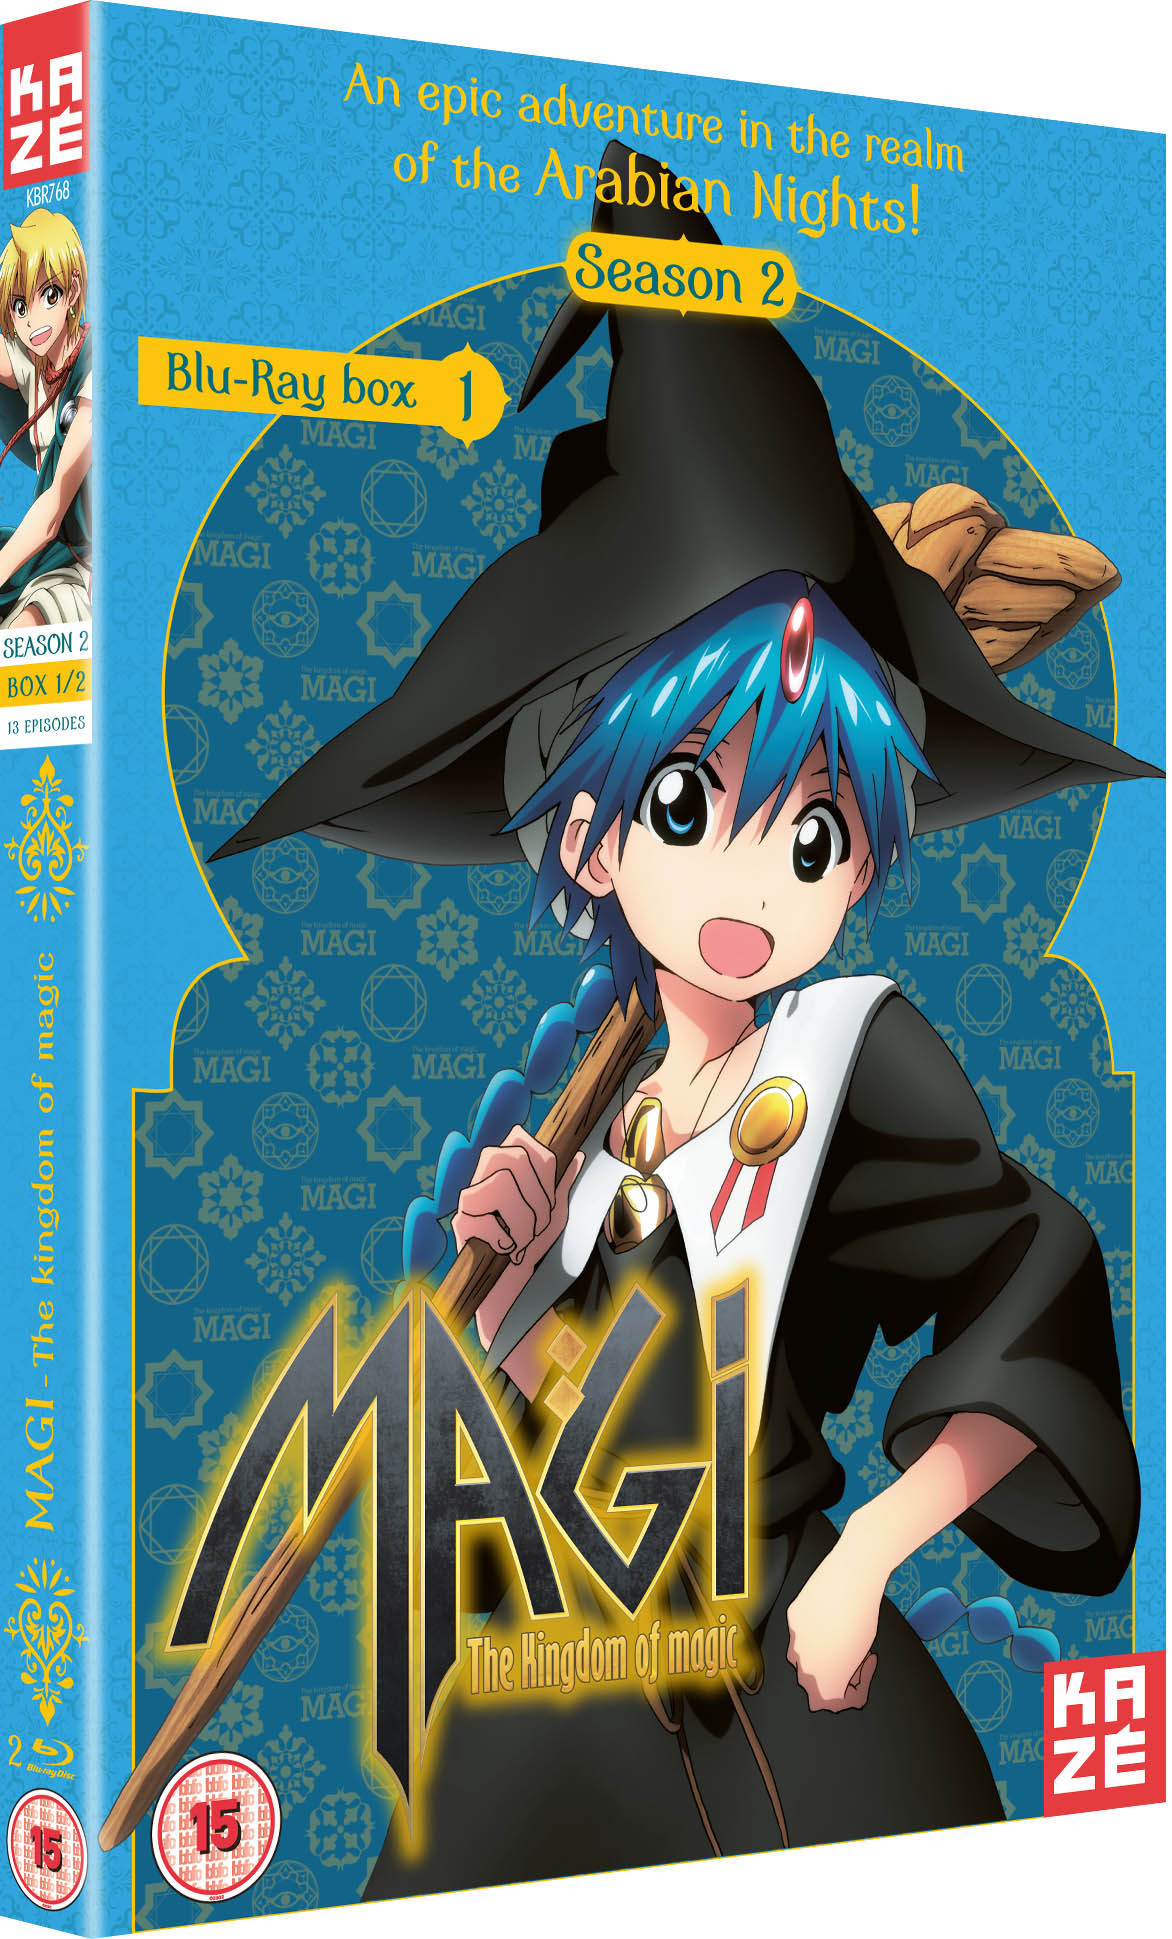 Buy Magi - The Kingdom of Magic DVD Complete Box Set - $32.99 at